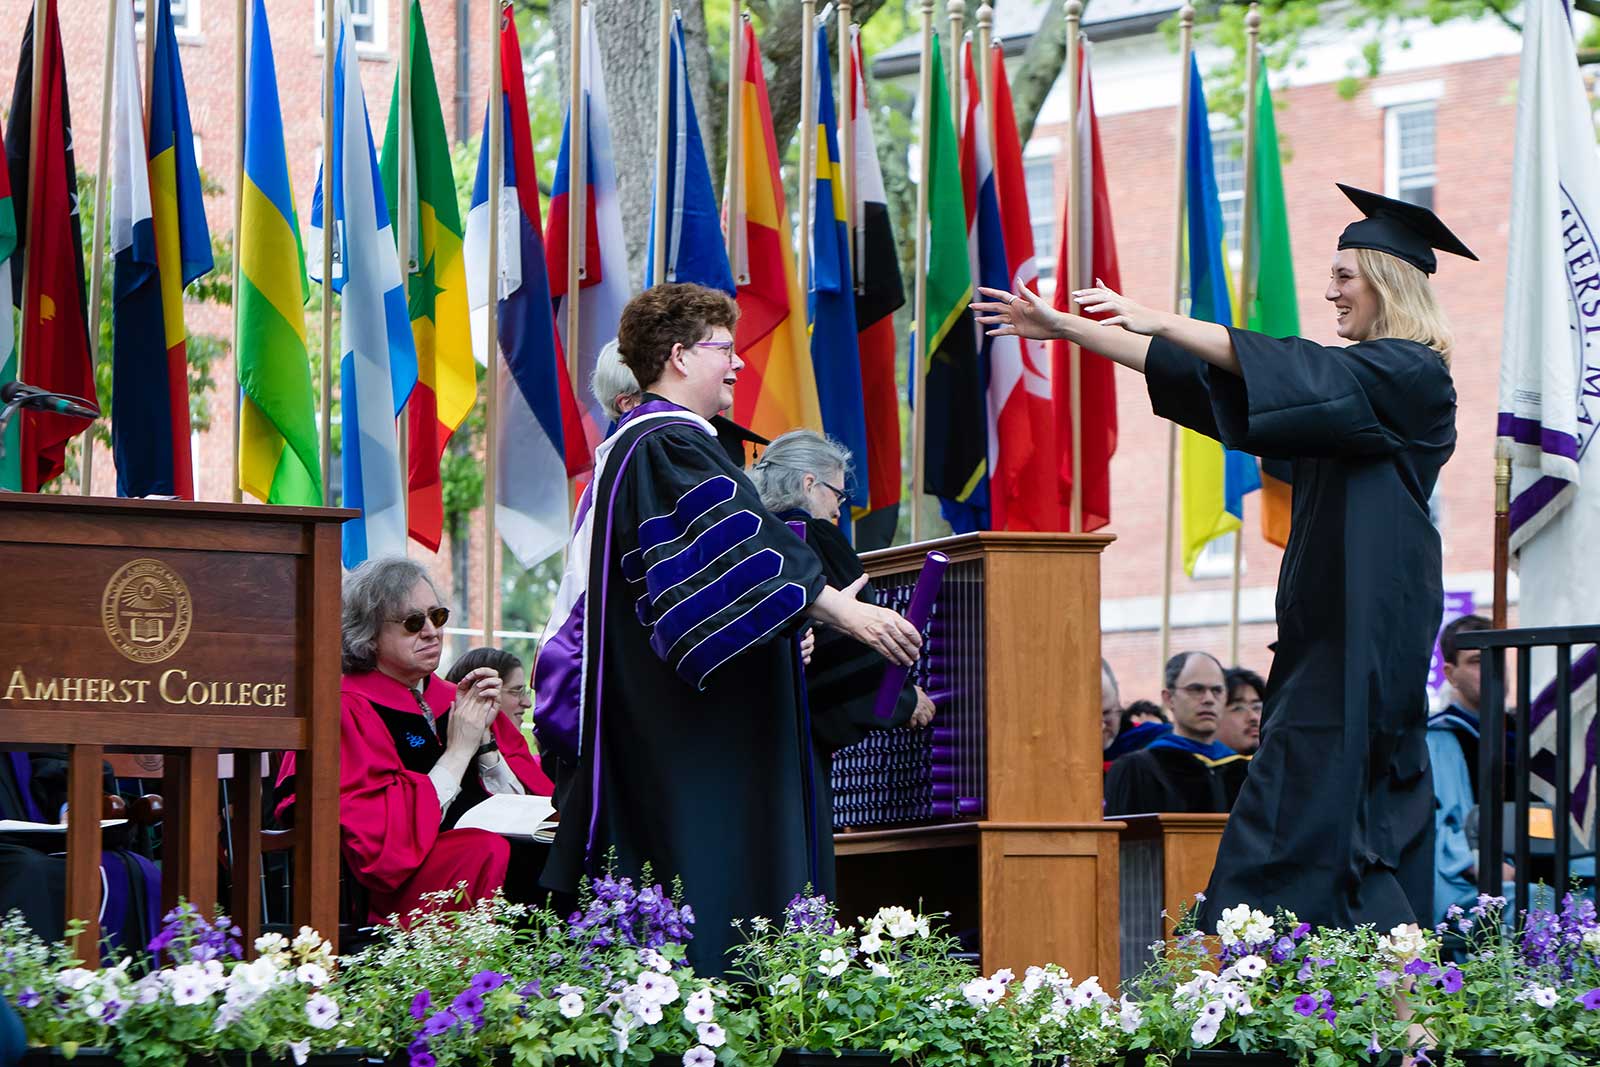 President Martin embracing a new graduate